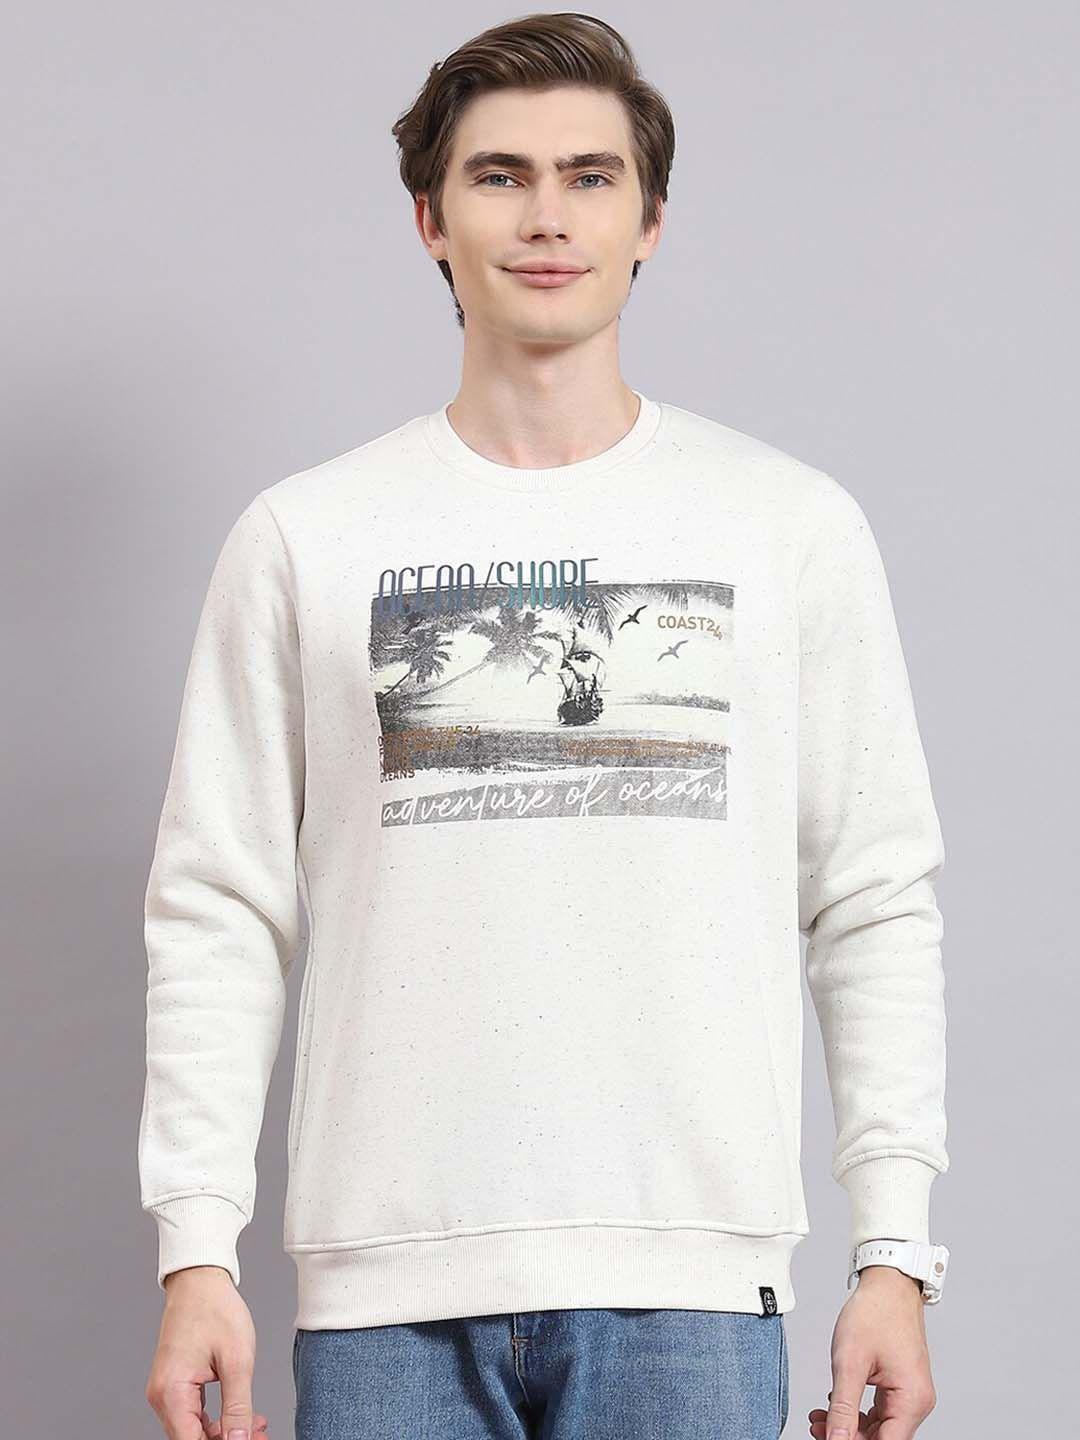 monte-carlo-graphic-printed-round-neck-cotton-pullover-sweatshirt